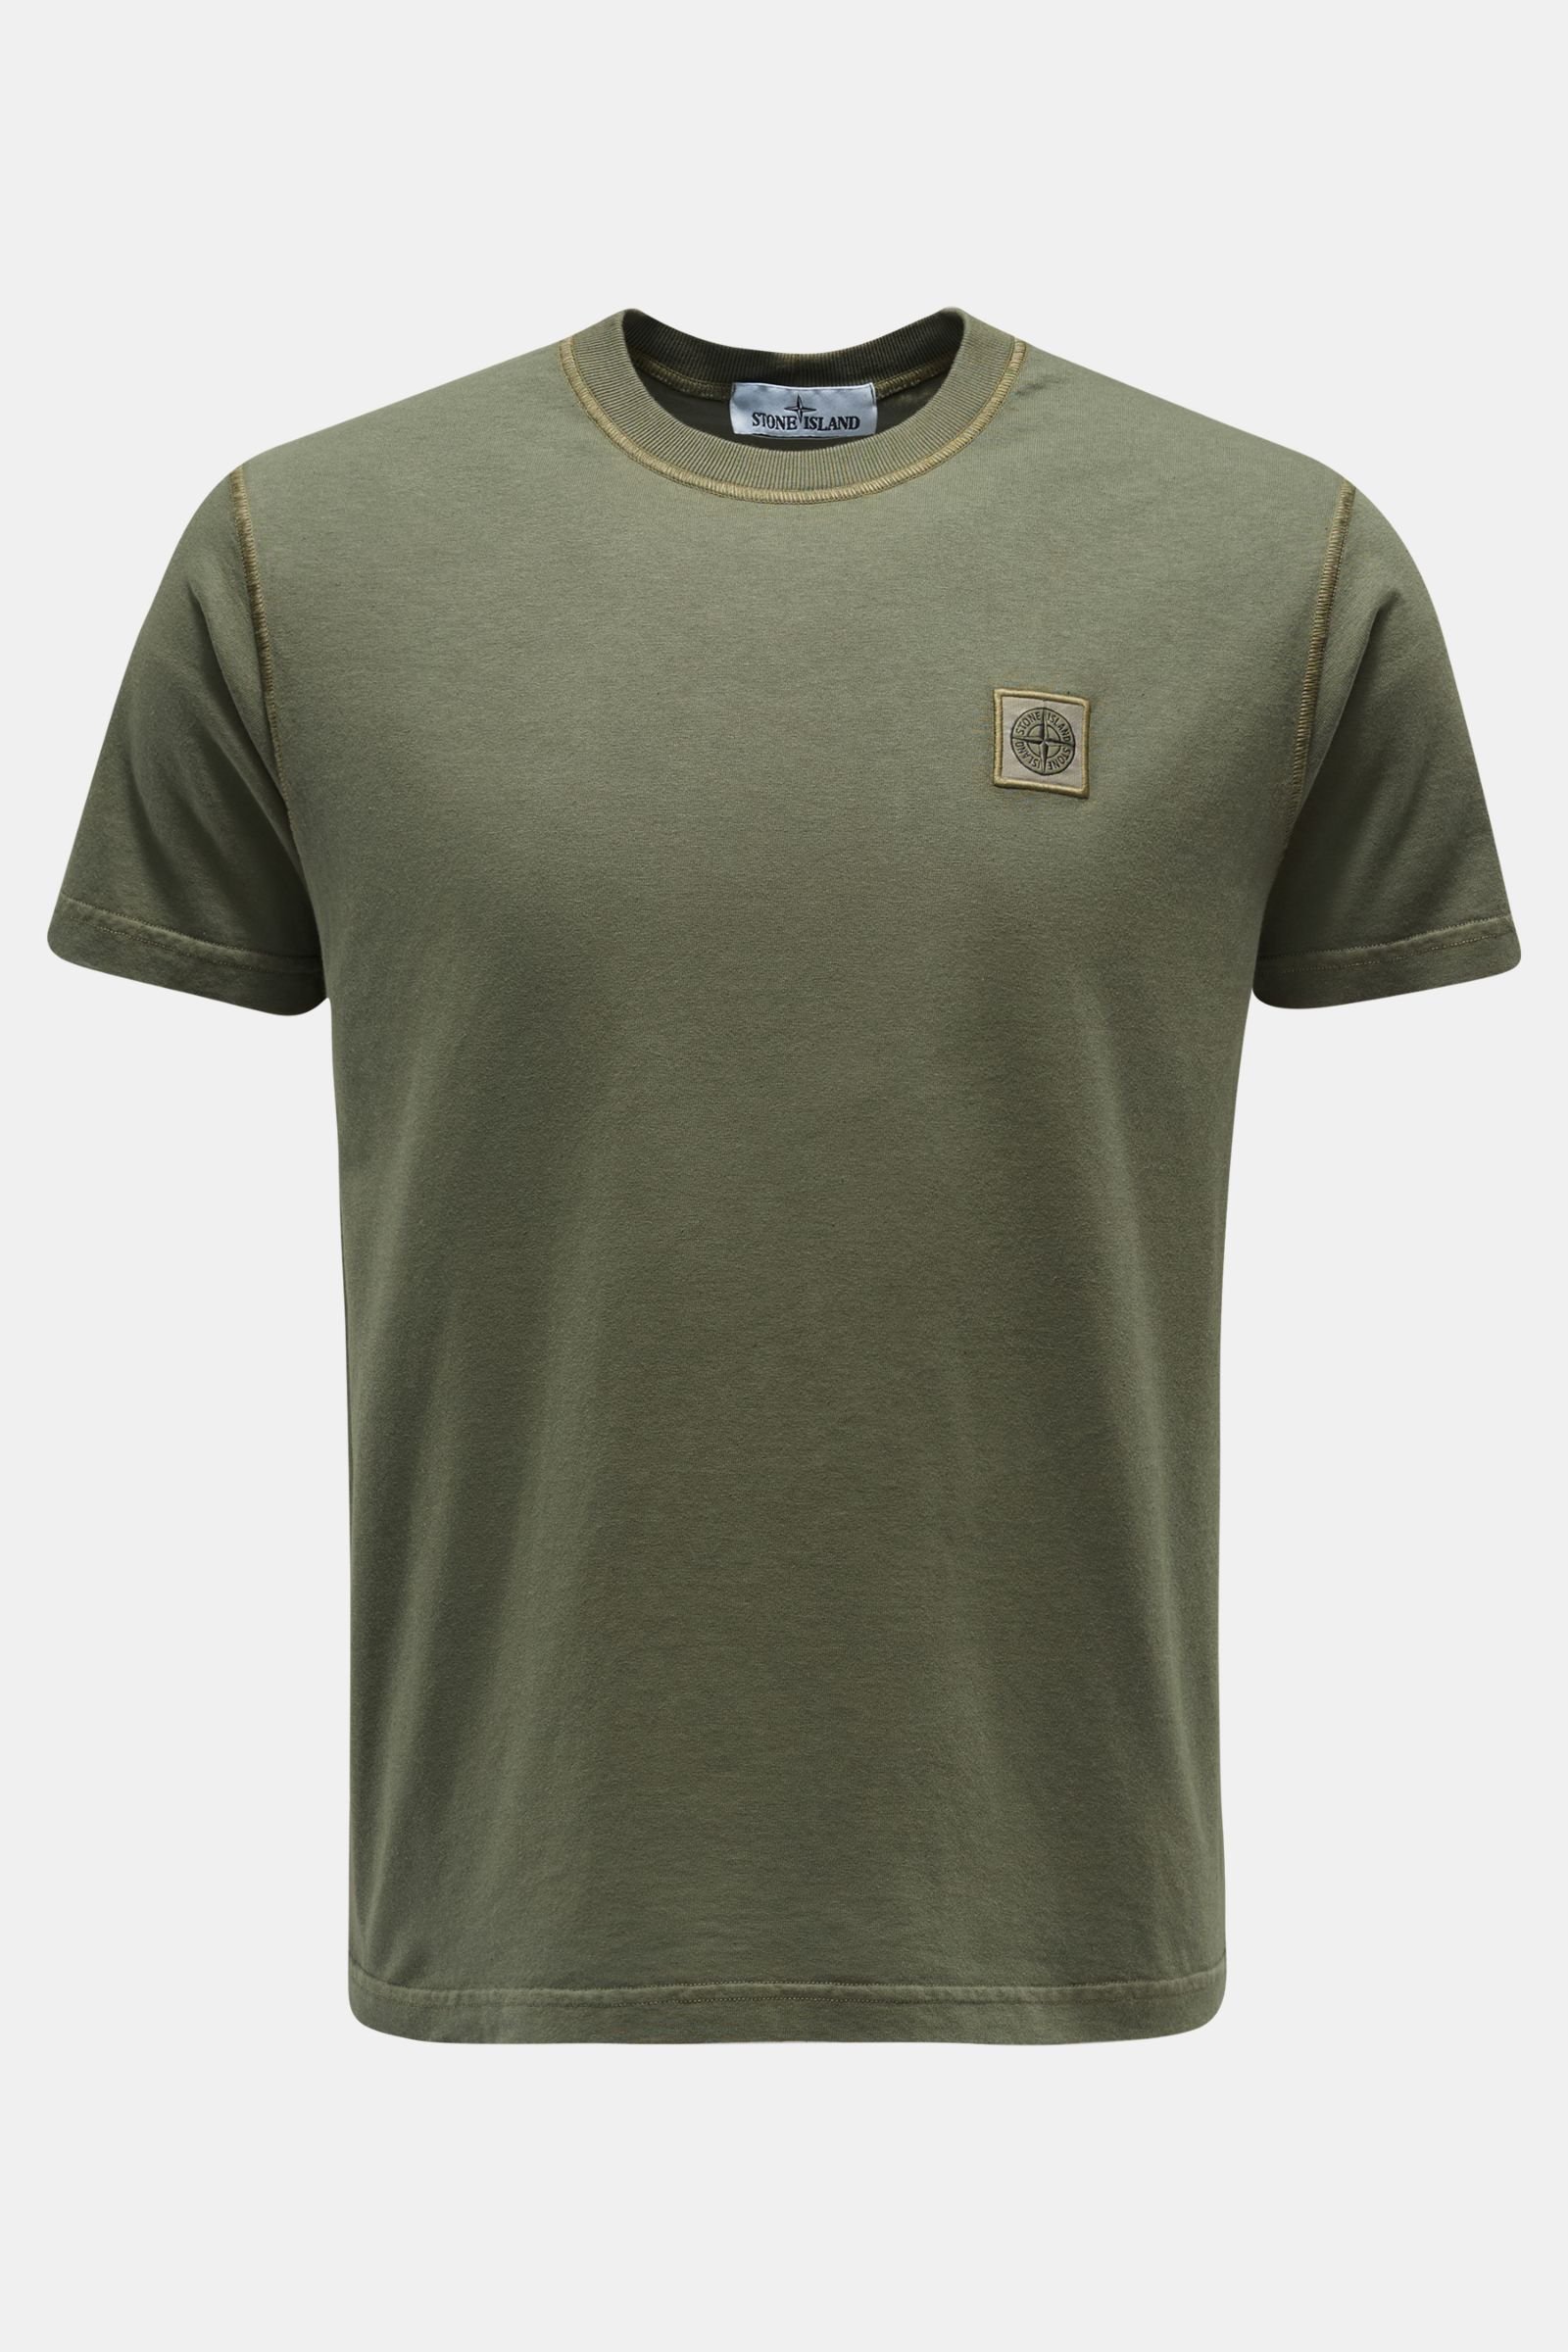 Crew neck T-shirt olive